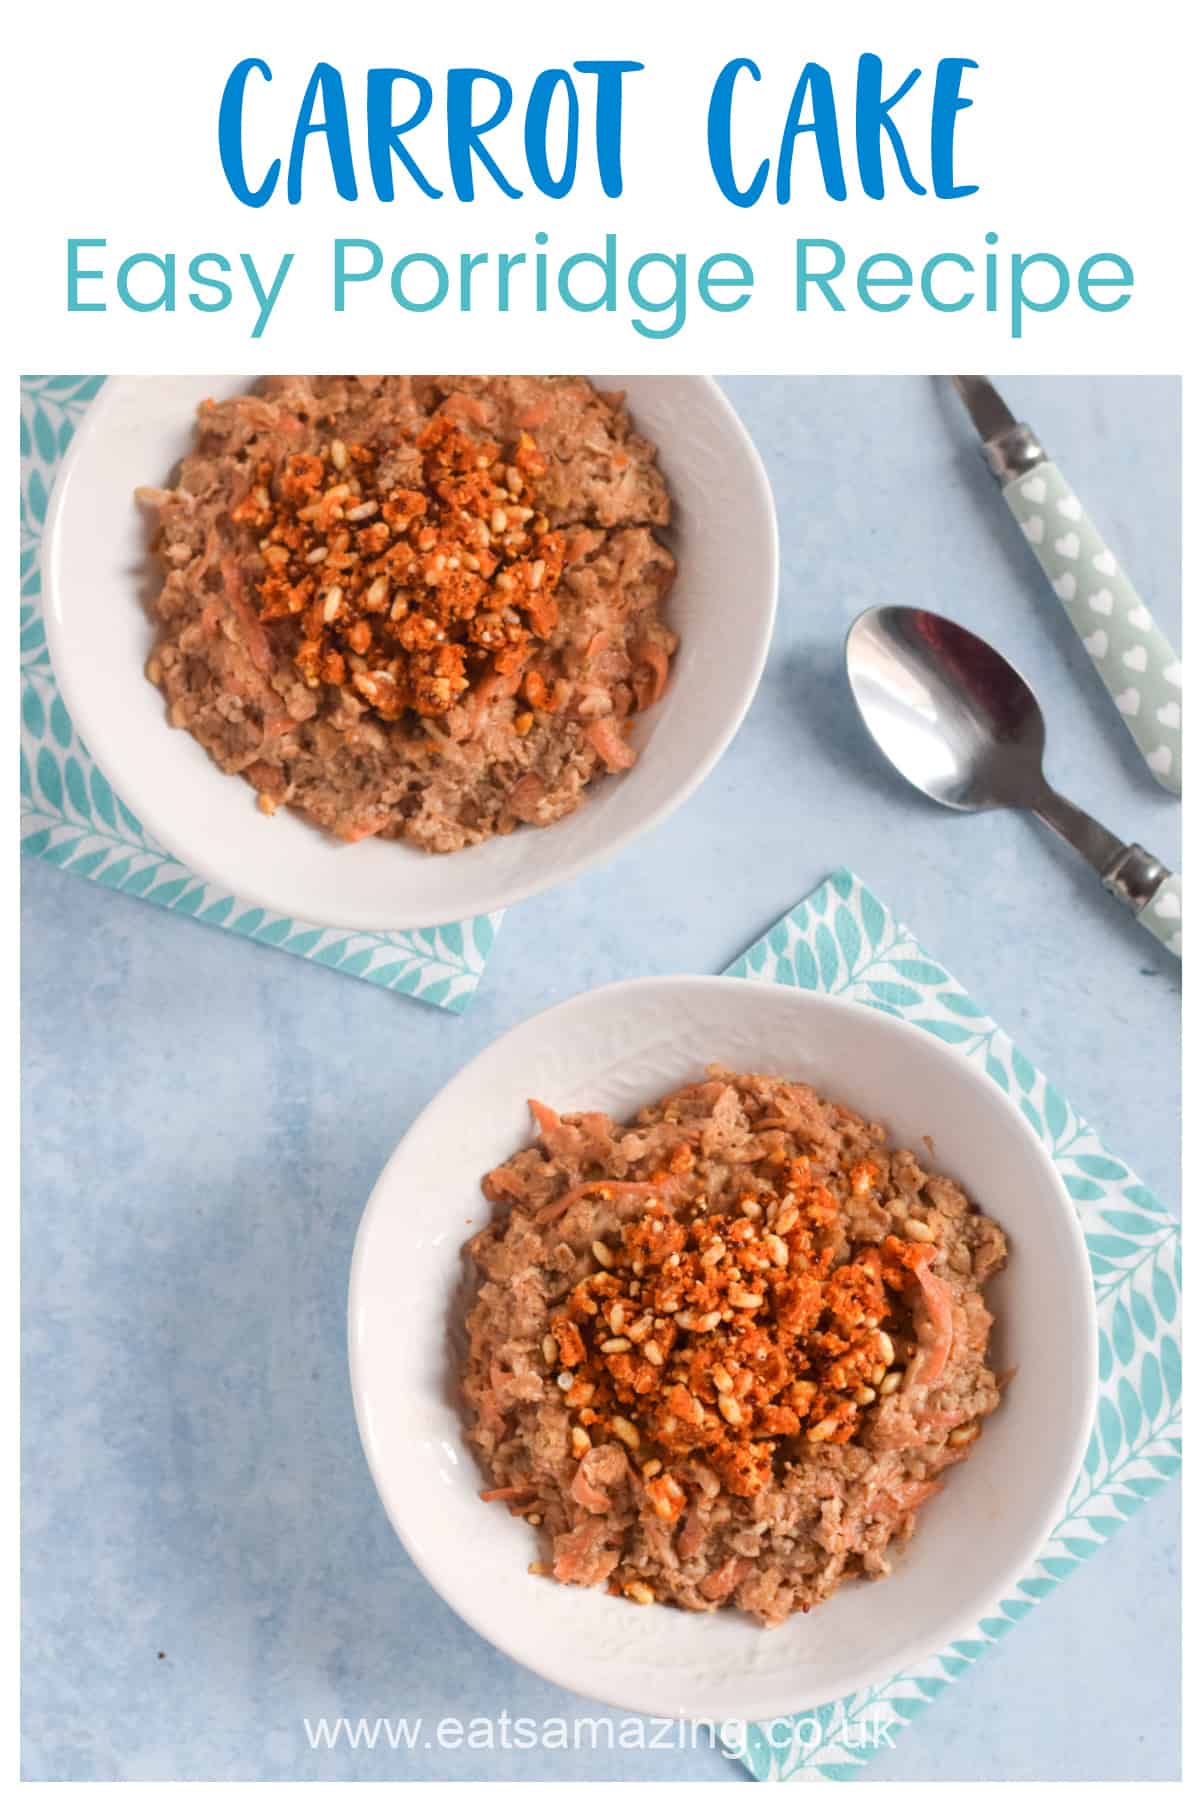 How to make quick and easy carrot cake porridge - healthy vegan breakfast recipe